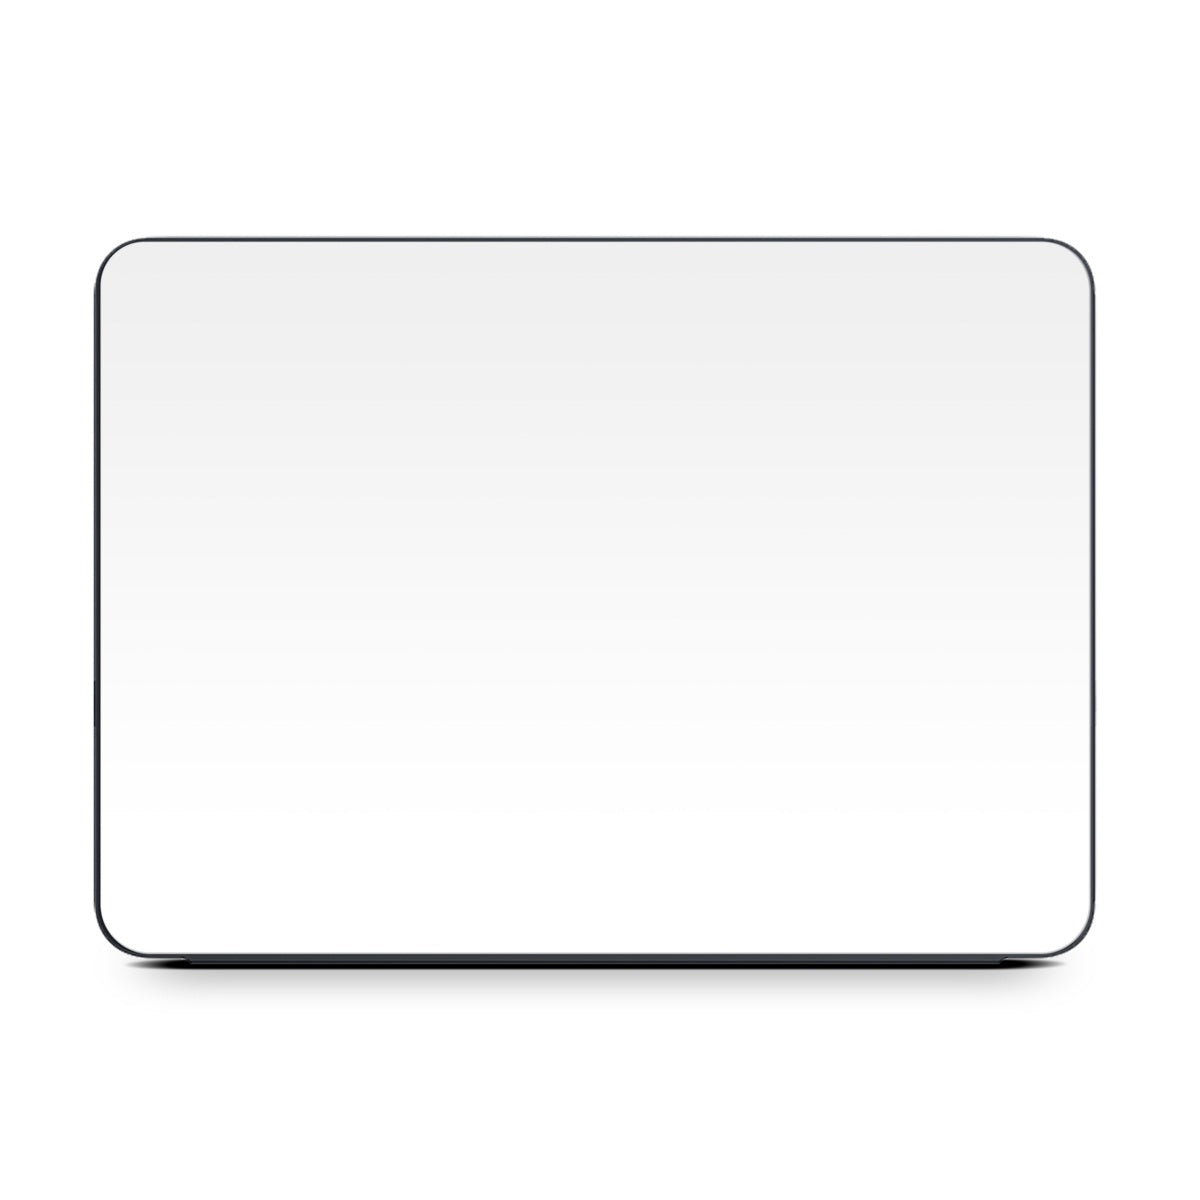 Solid State White - Apple Smart Keyboard Folio Skin